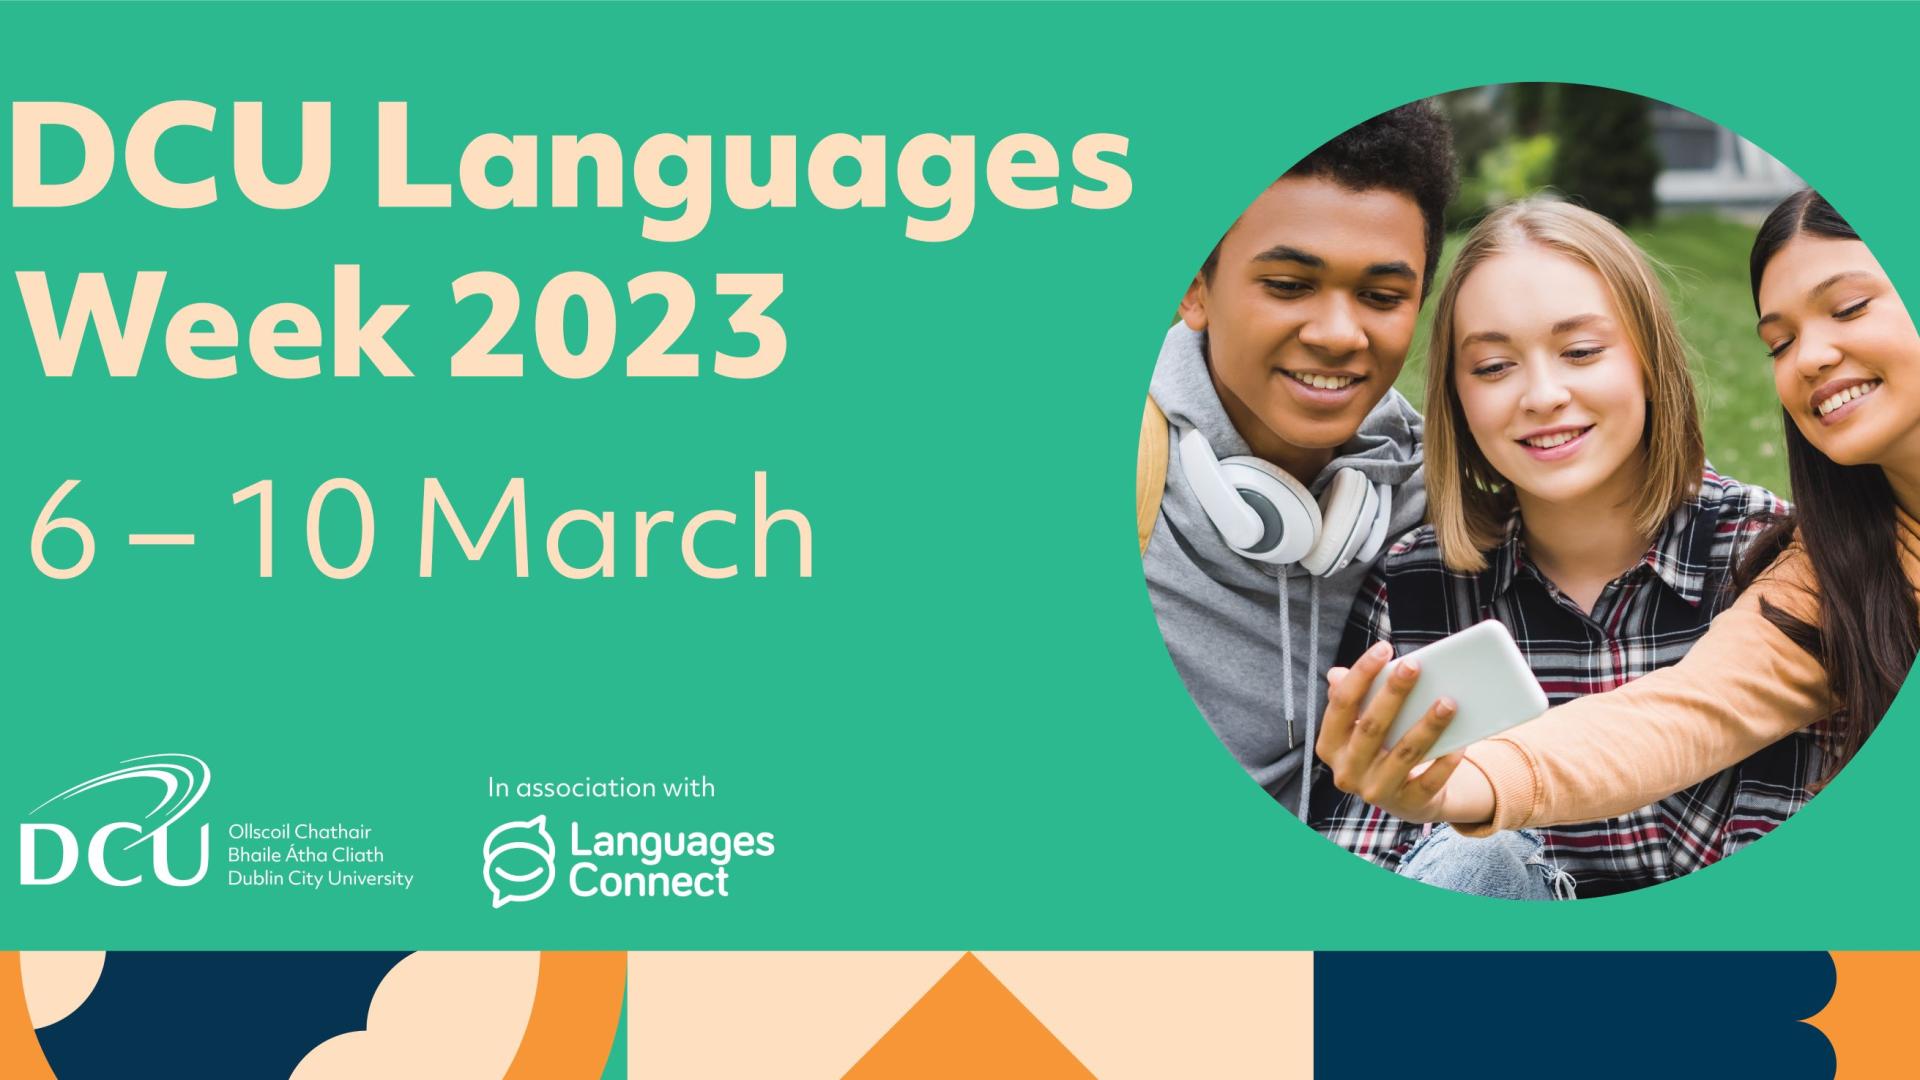 DCU Languages Week 2023